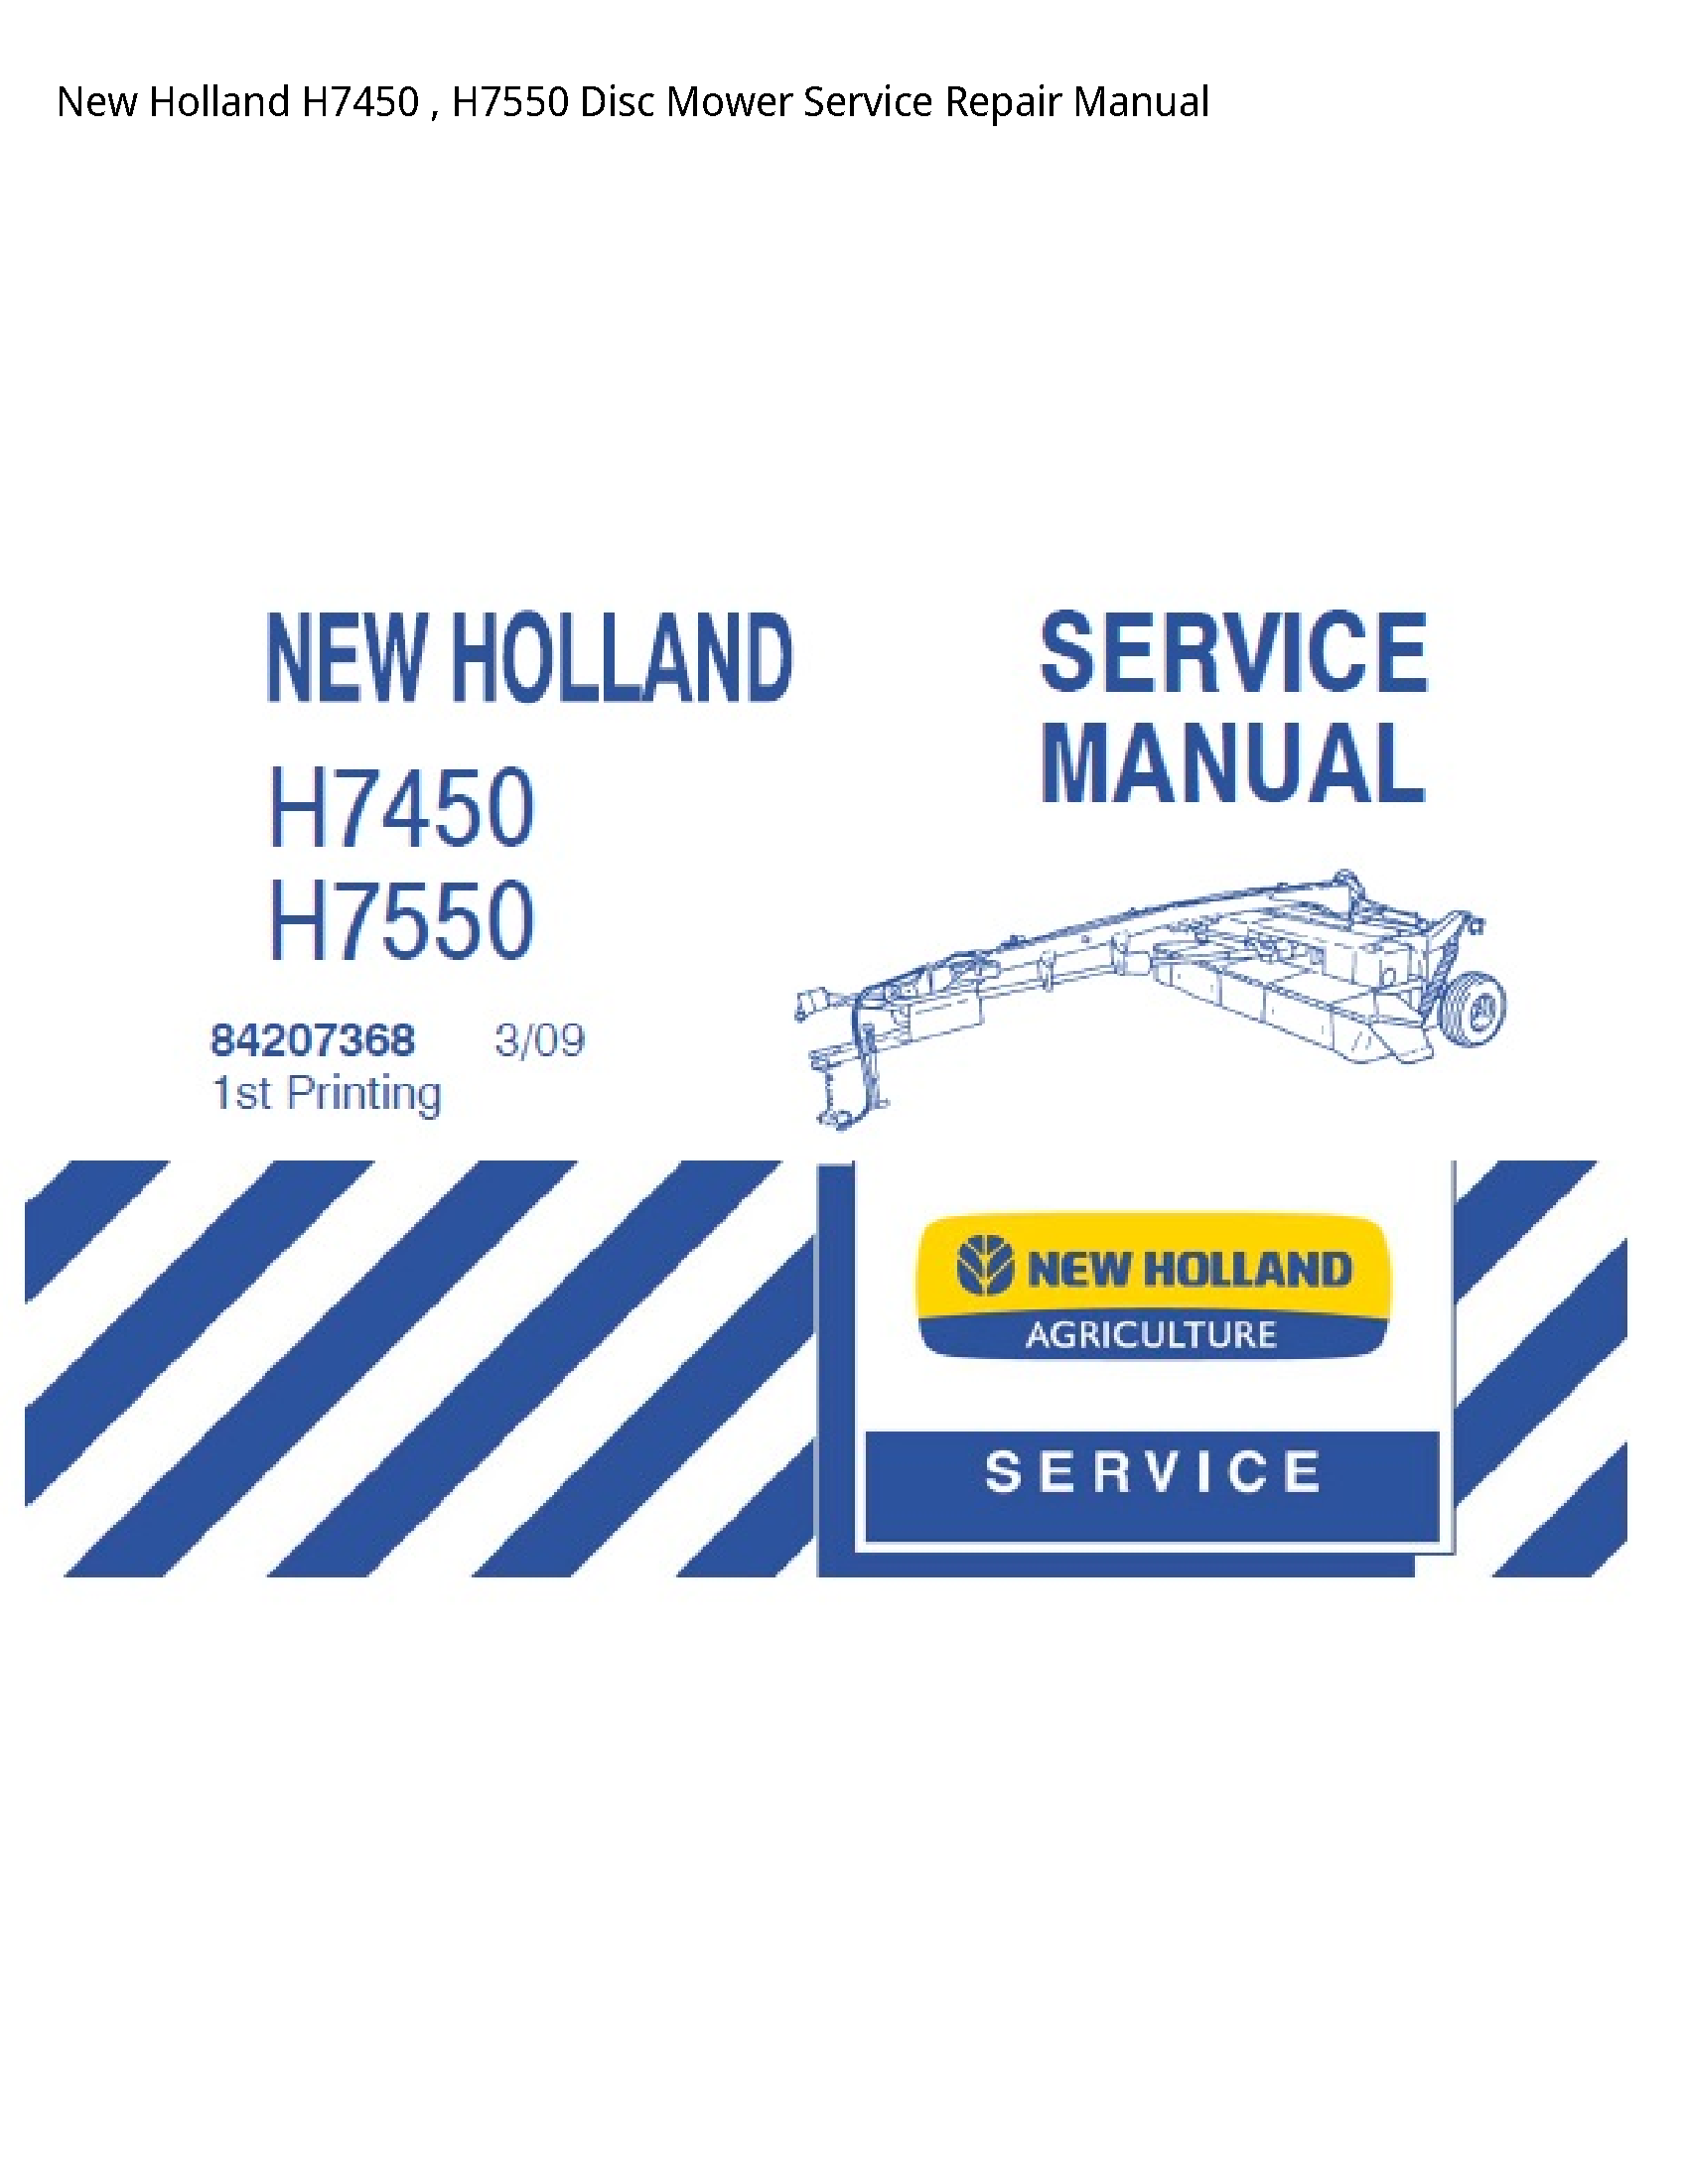 New Holland H7450 Disc Mower manual